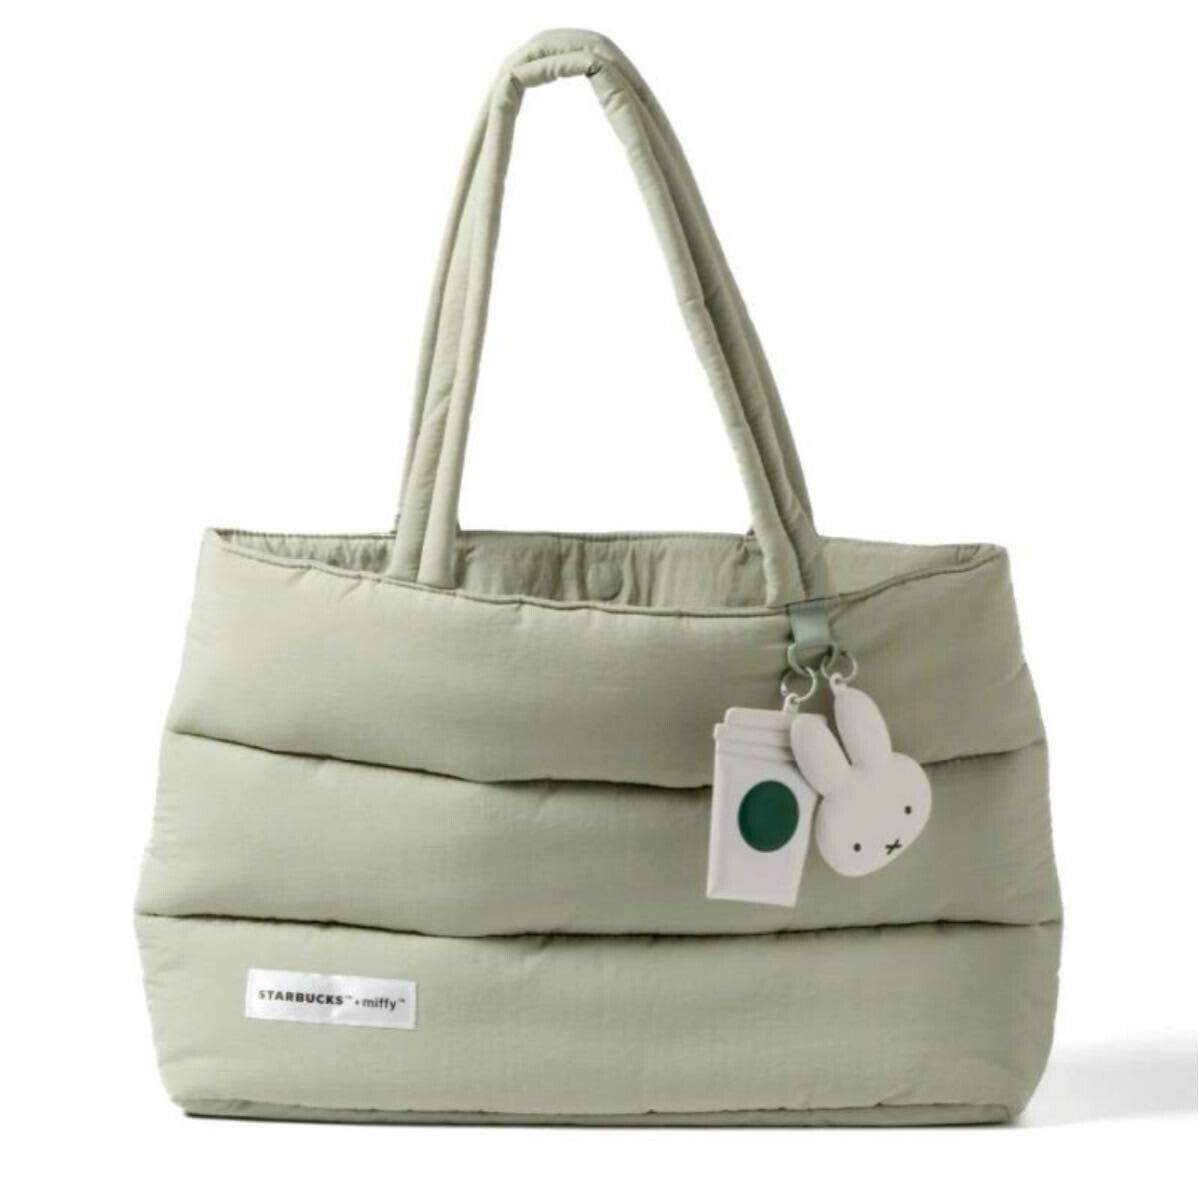 Starbucks x Miffy collaboration tote bag Green Singapore limited  45X12X31cm